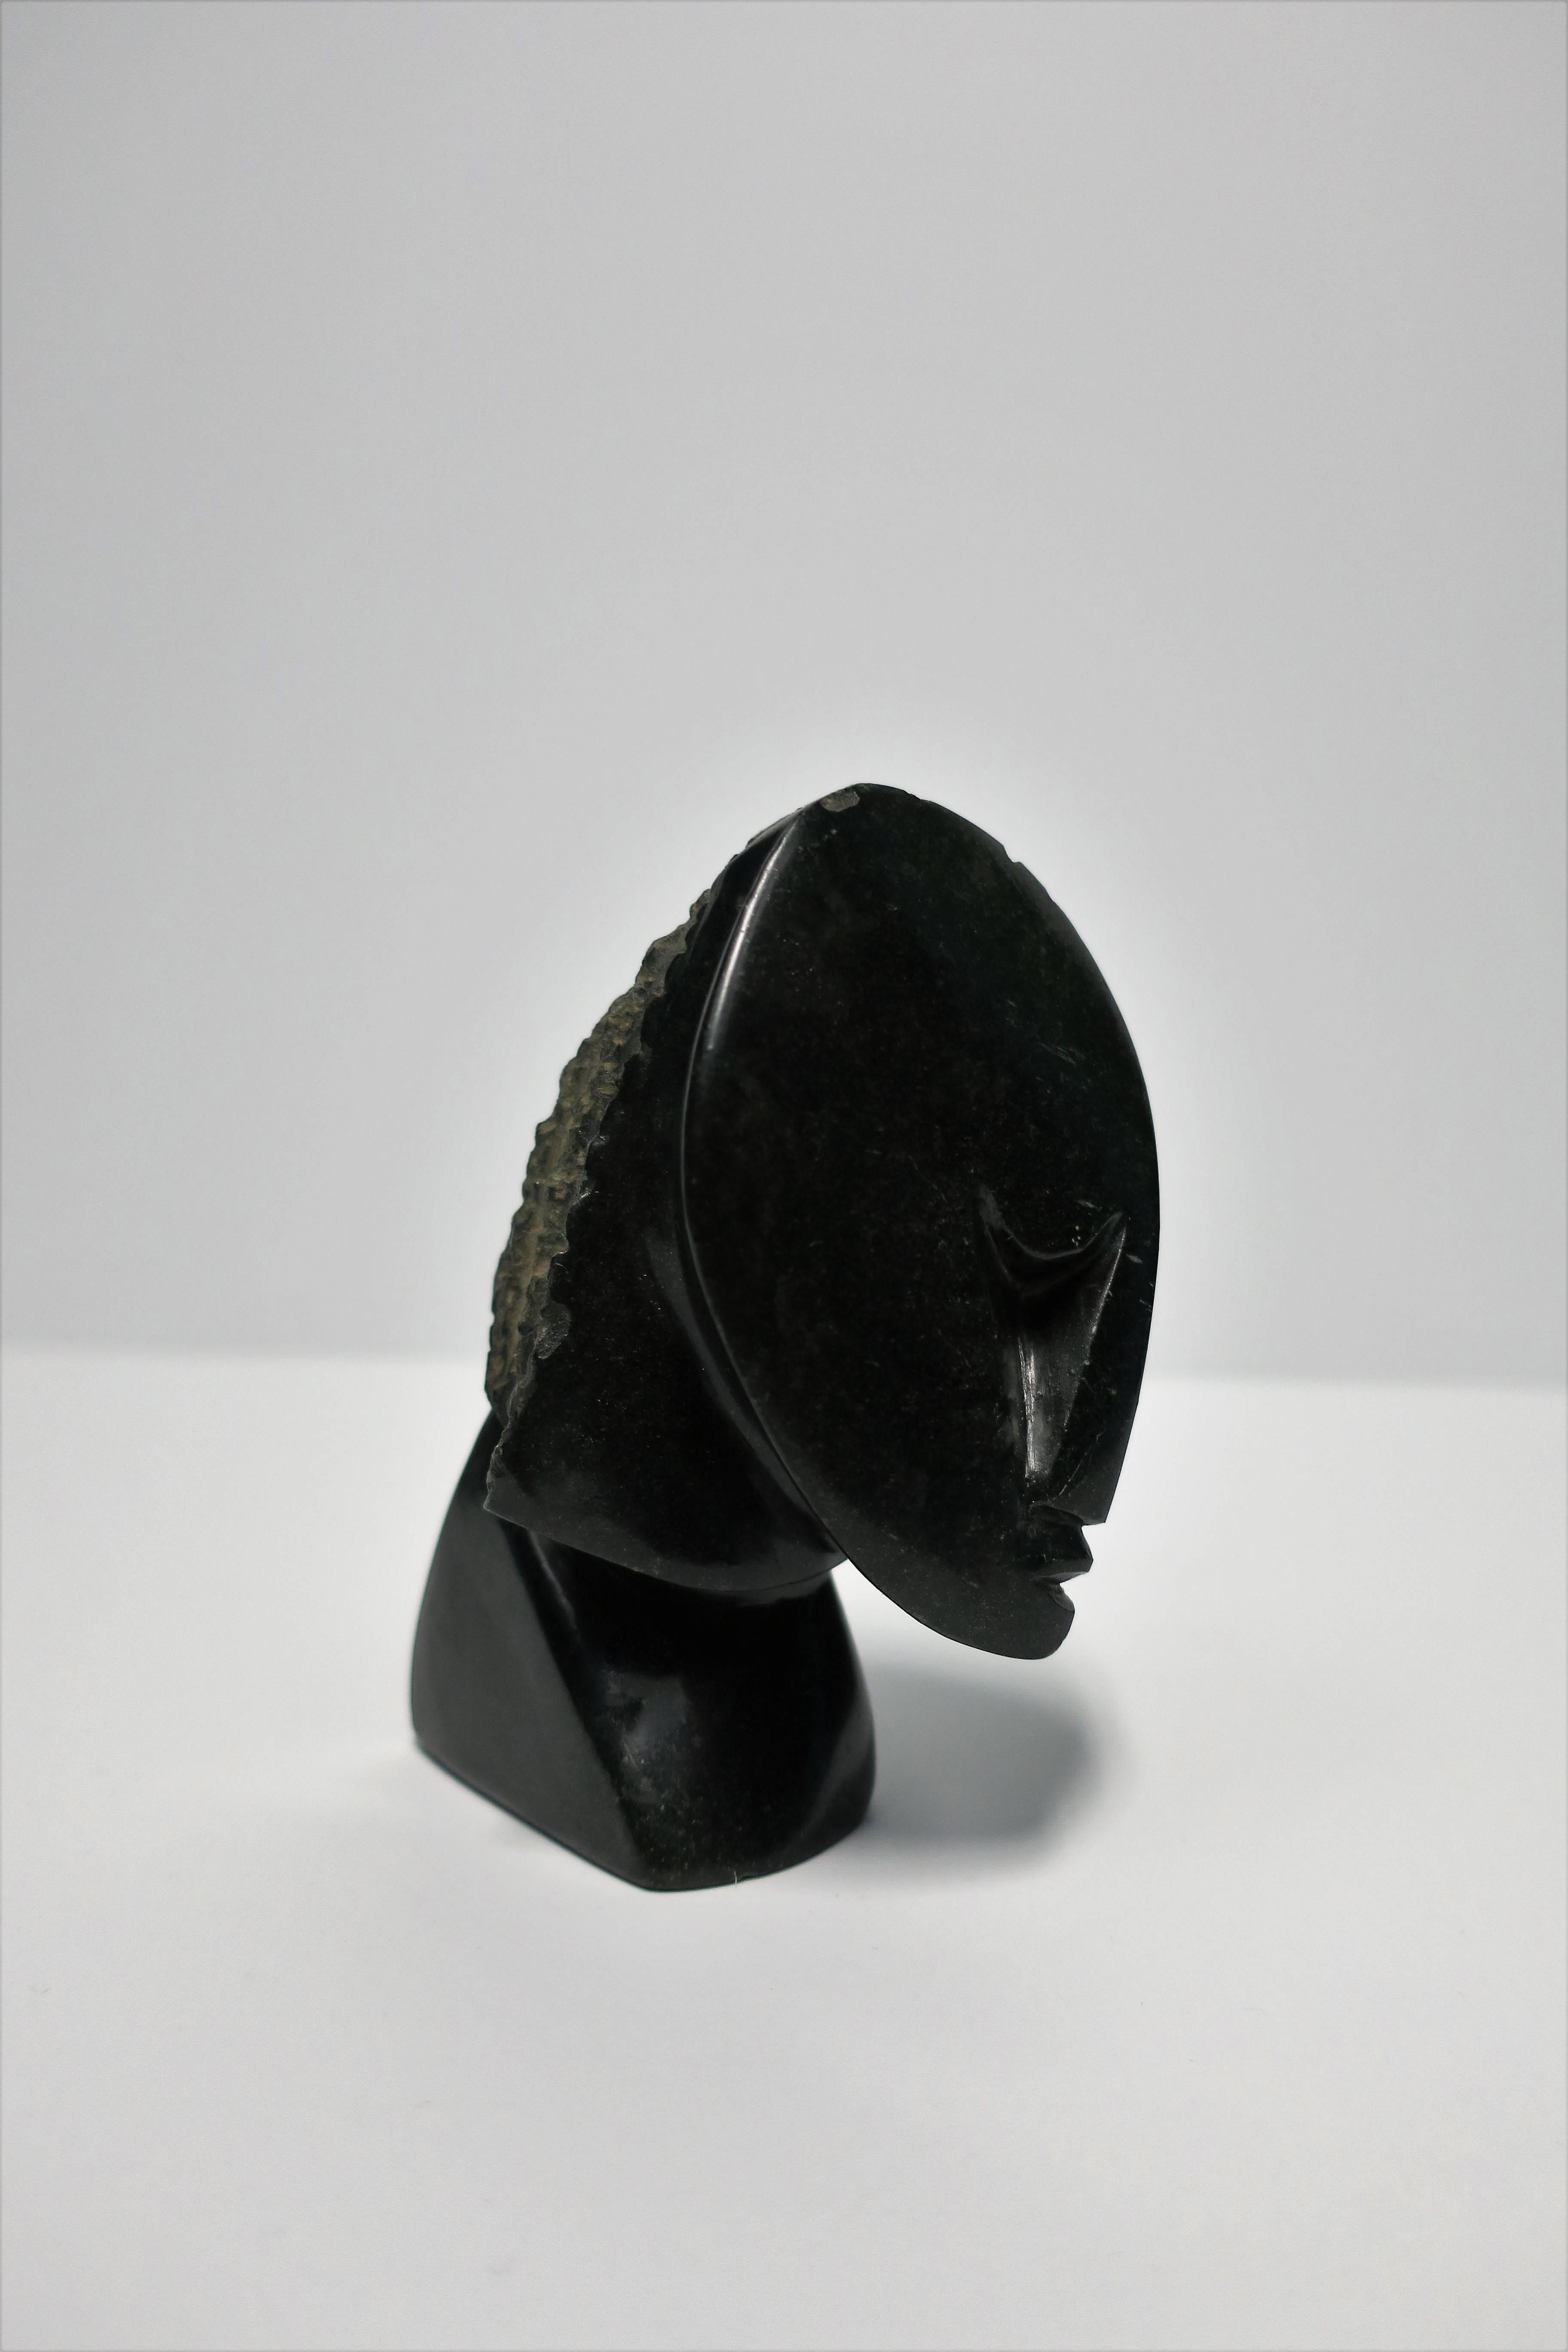 20th Century Black Stone Cubist Sculpture after Picasso